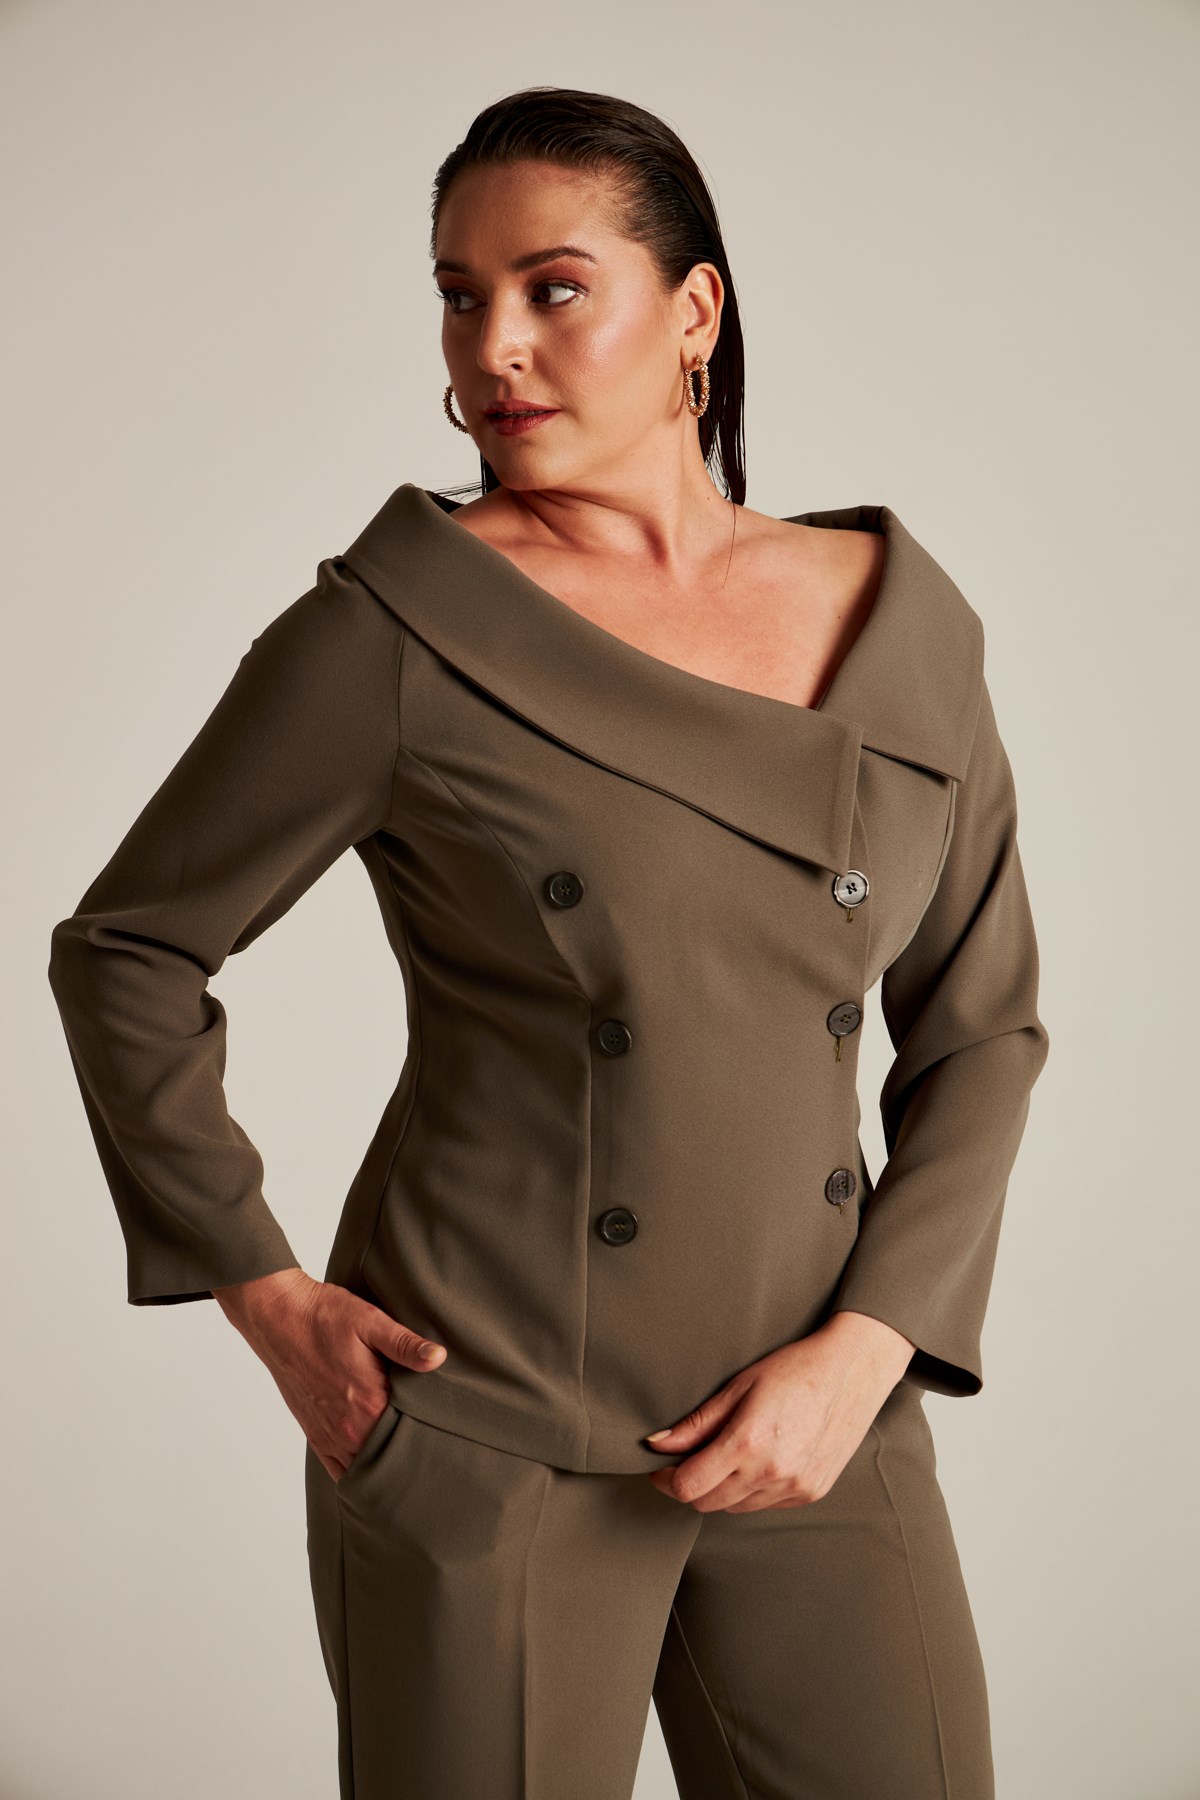 Tiffany Ceket Haki - düğmeli omuz dekolteli ceket | Ceket | Modalogy